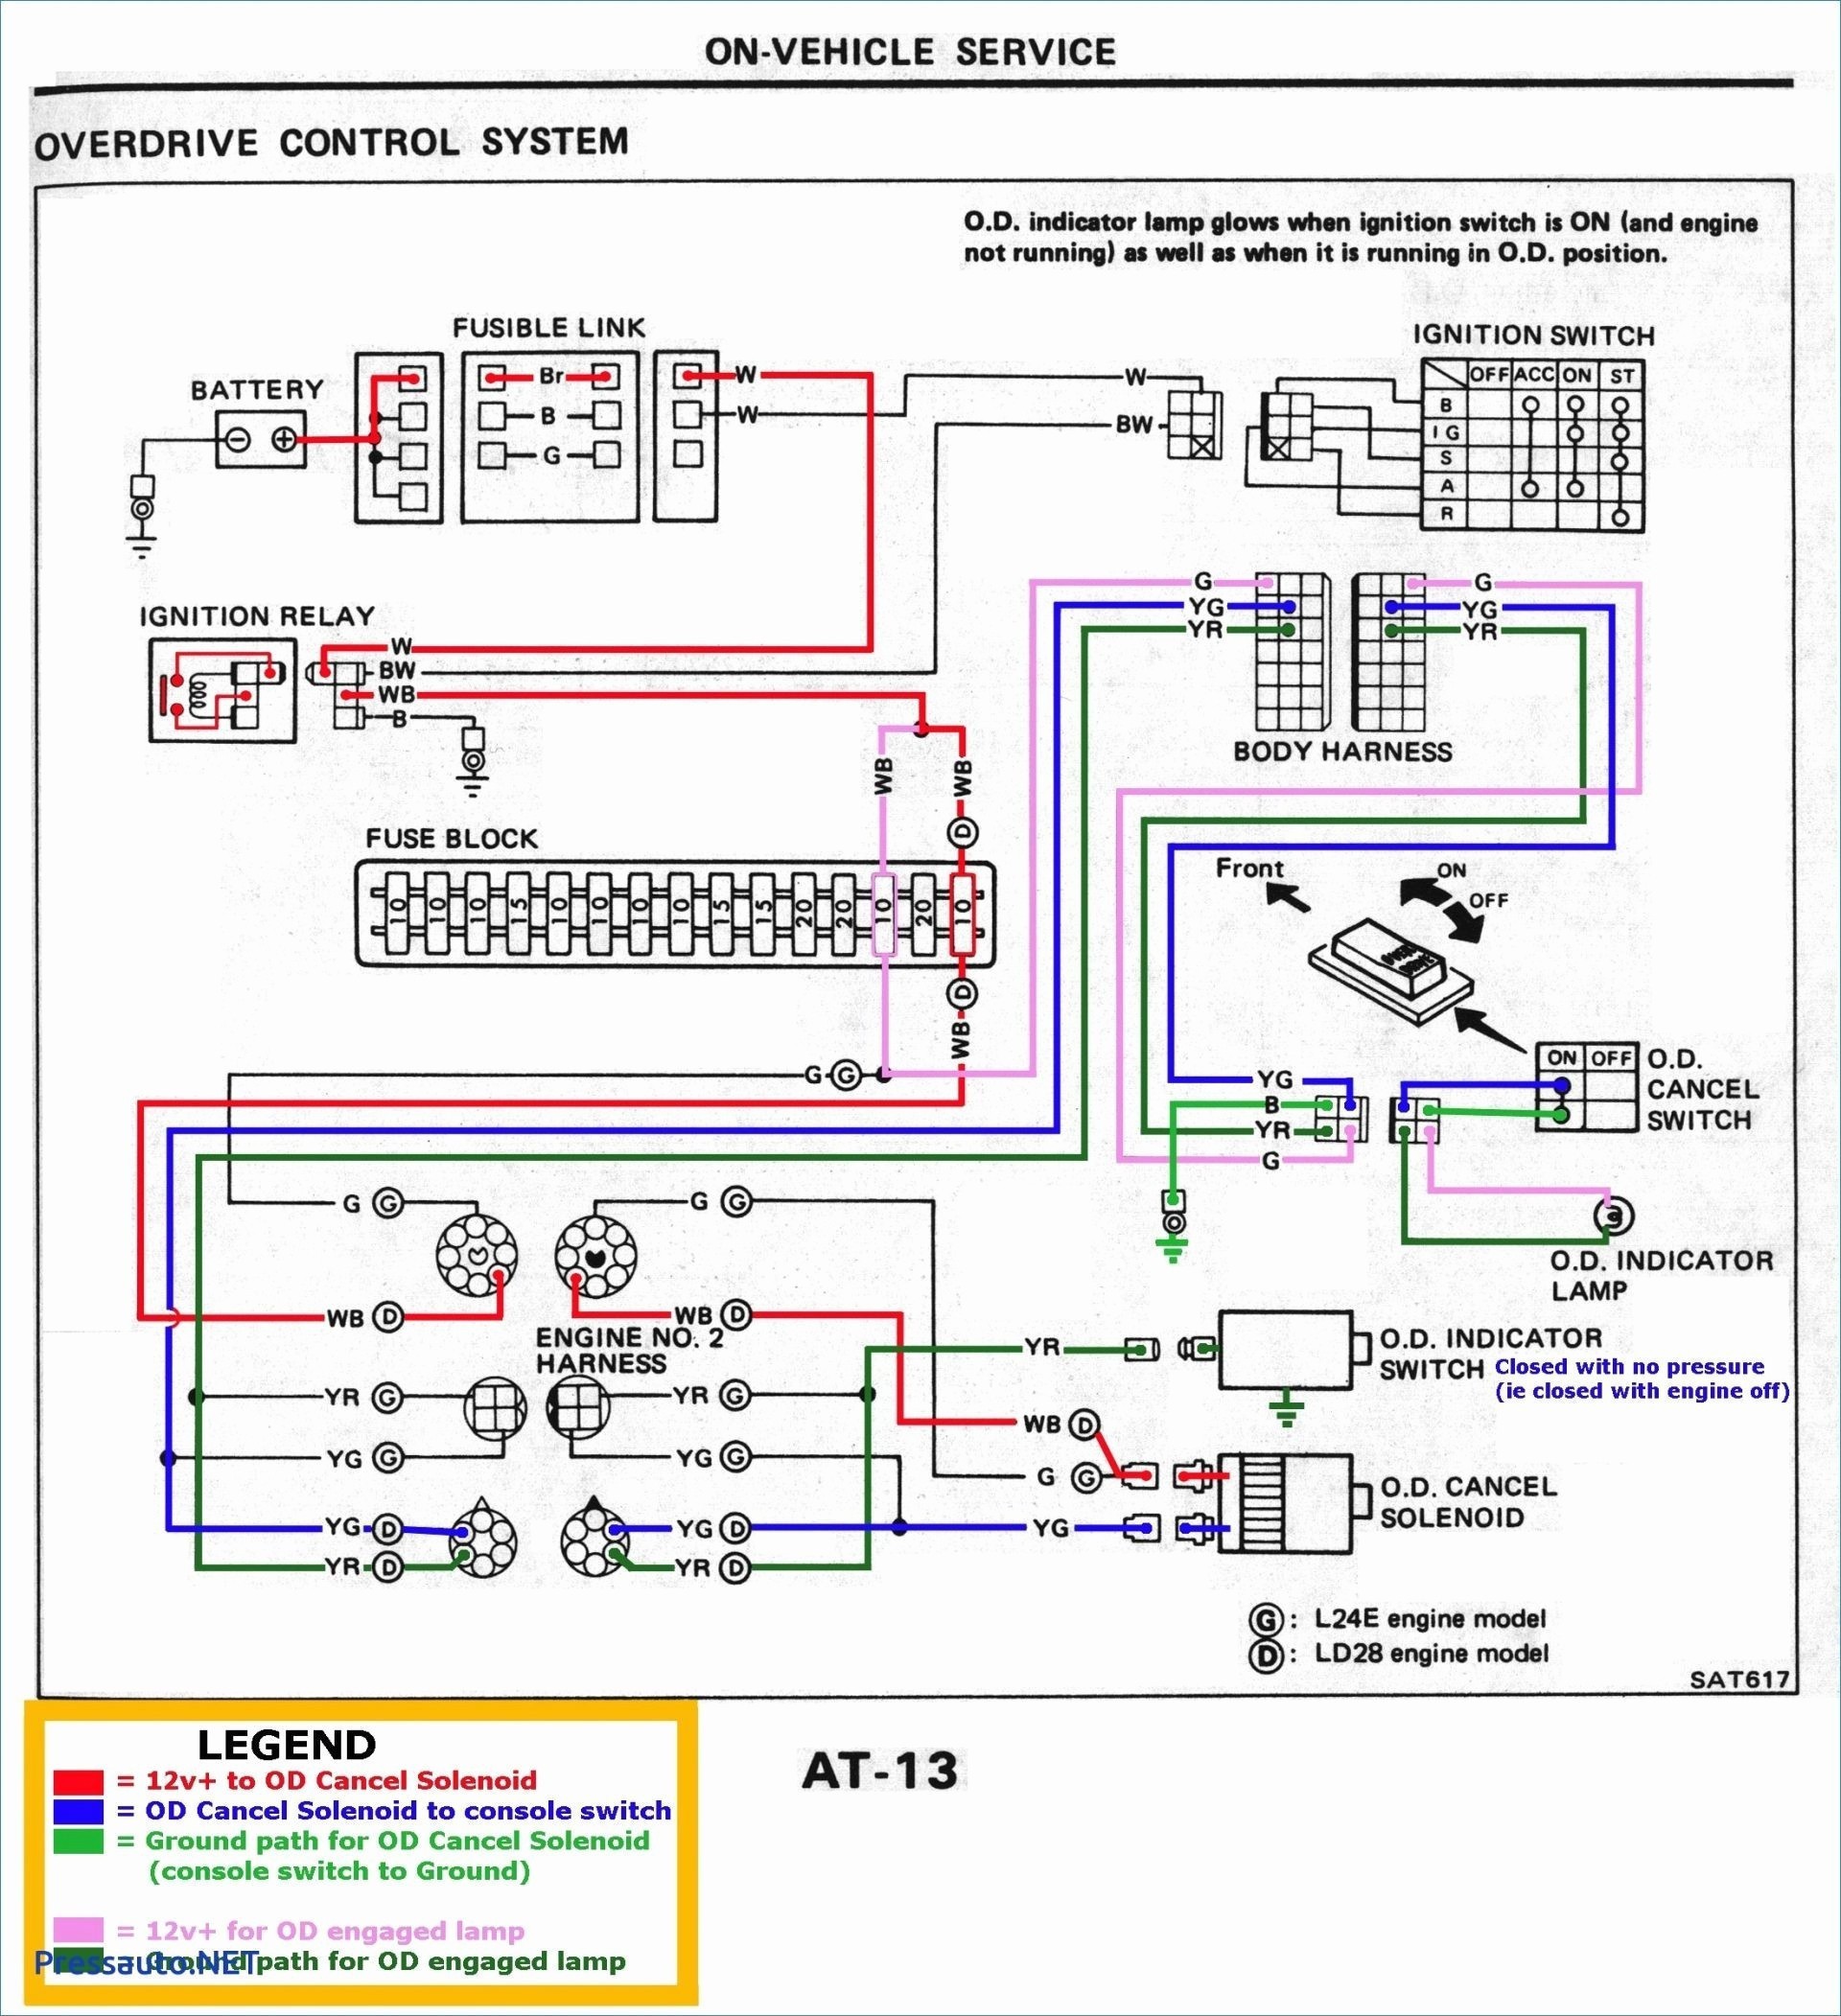 3 Phase Switch Wiring Diagram 208v Single Phase Motor Wiring Diagram Of 3 Phase Switch Wiring Diagram